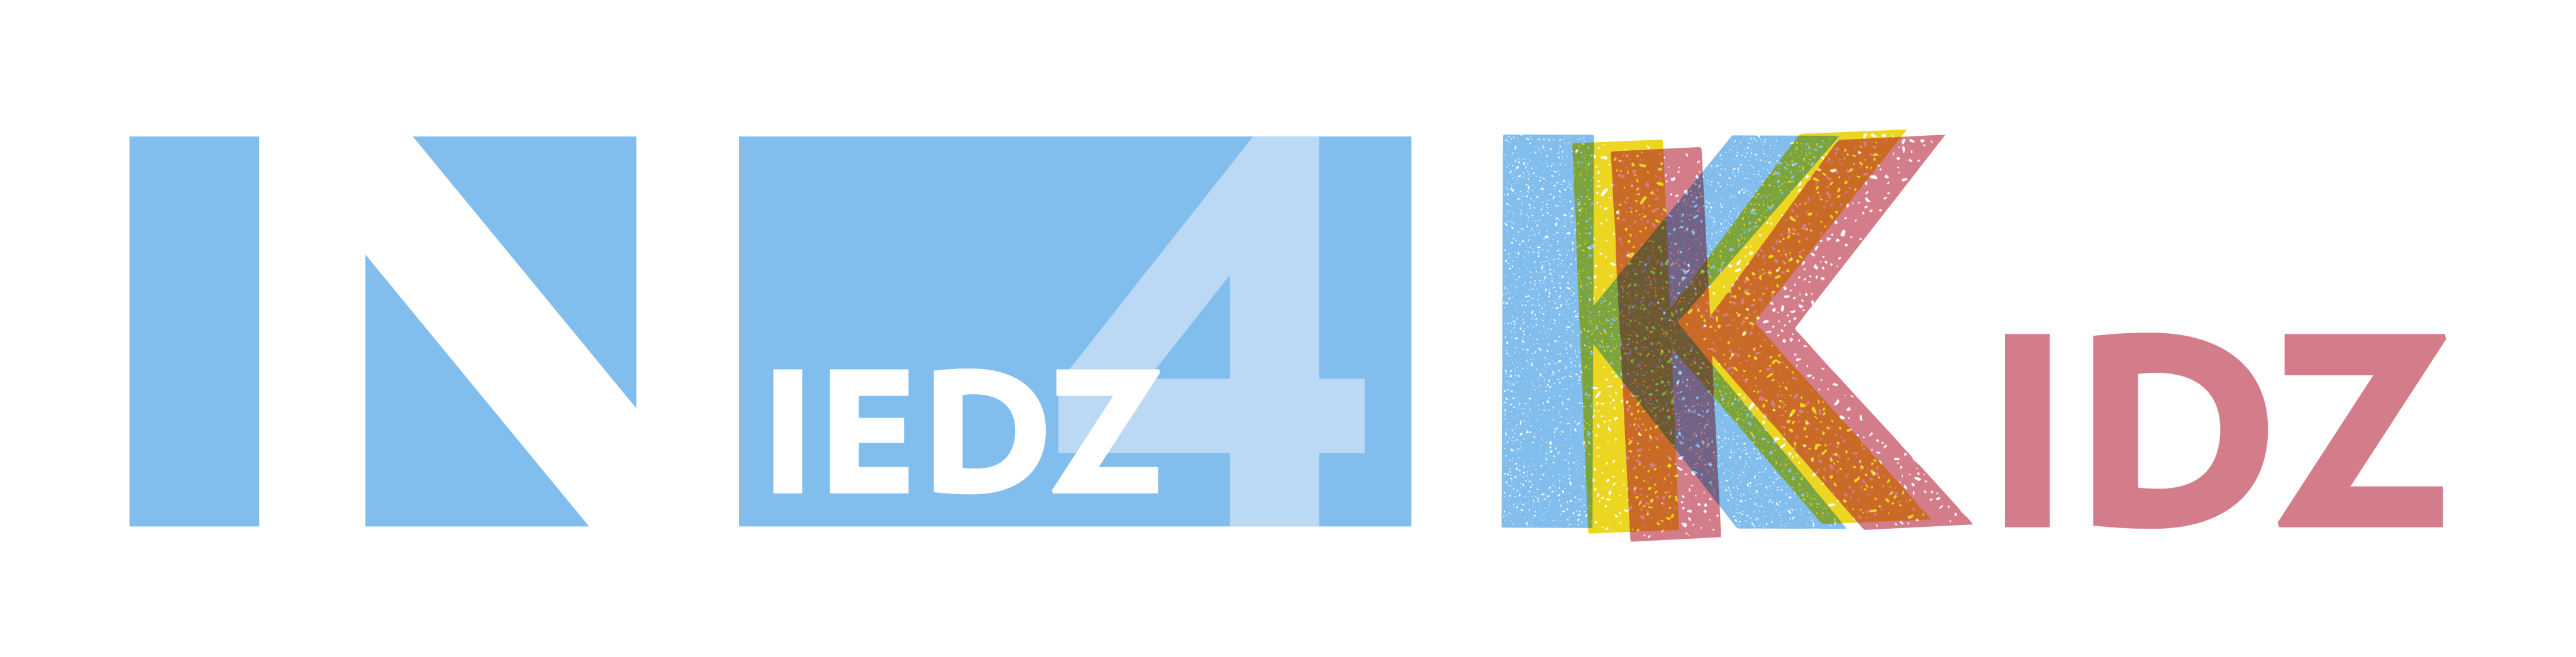 Logo-Niederanven-Niedz4Kidz